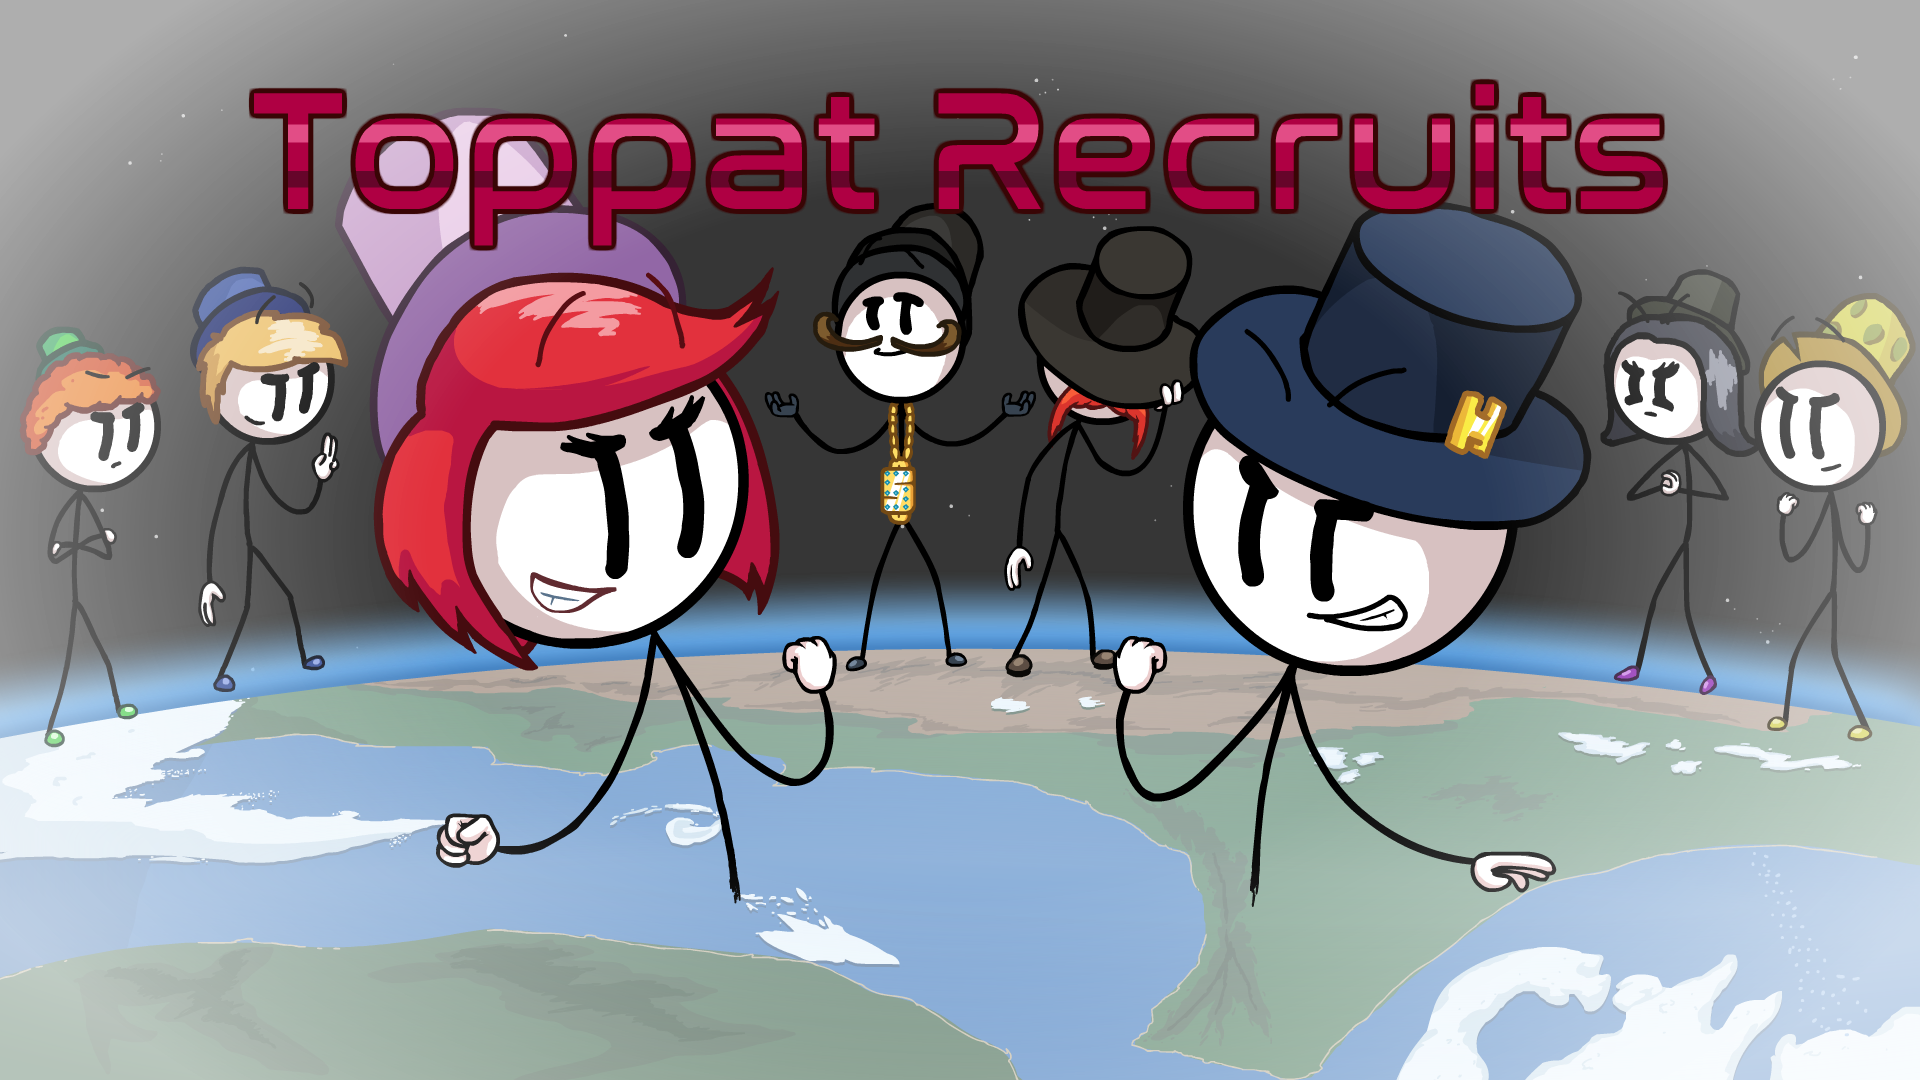 Toppat Recruits